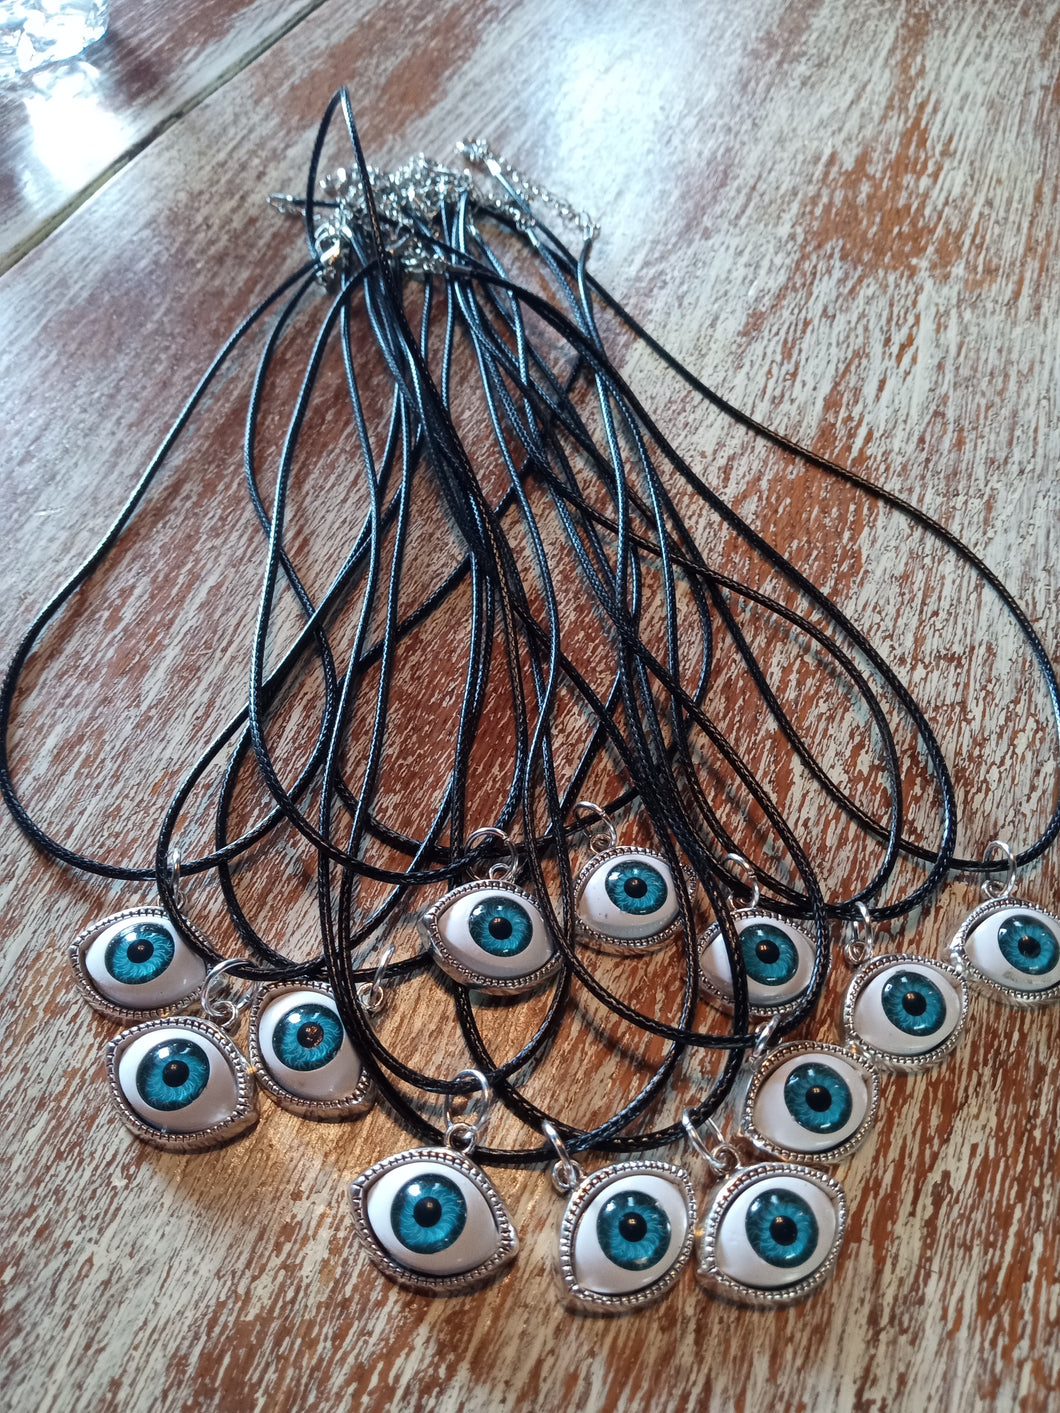 Evil Eye Necklace (Evil Eye, Protection, Reverses Evil)